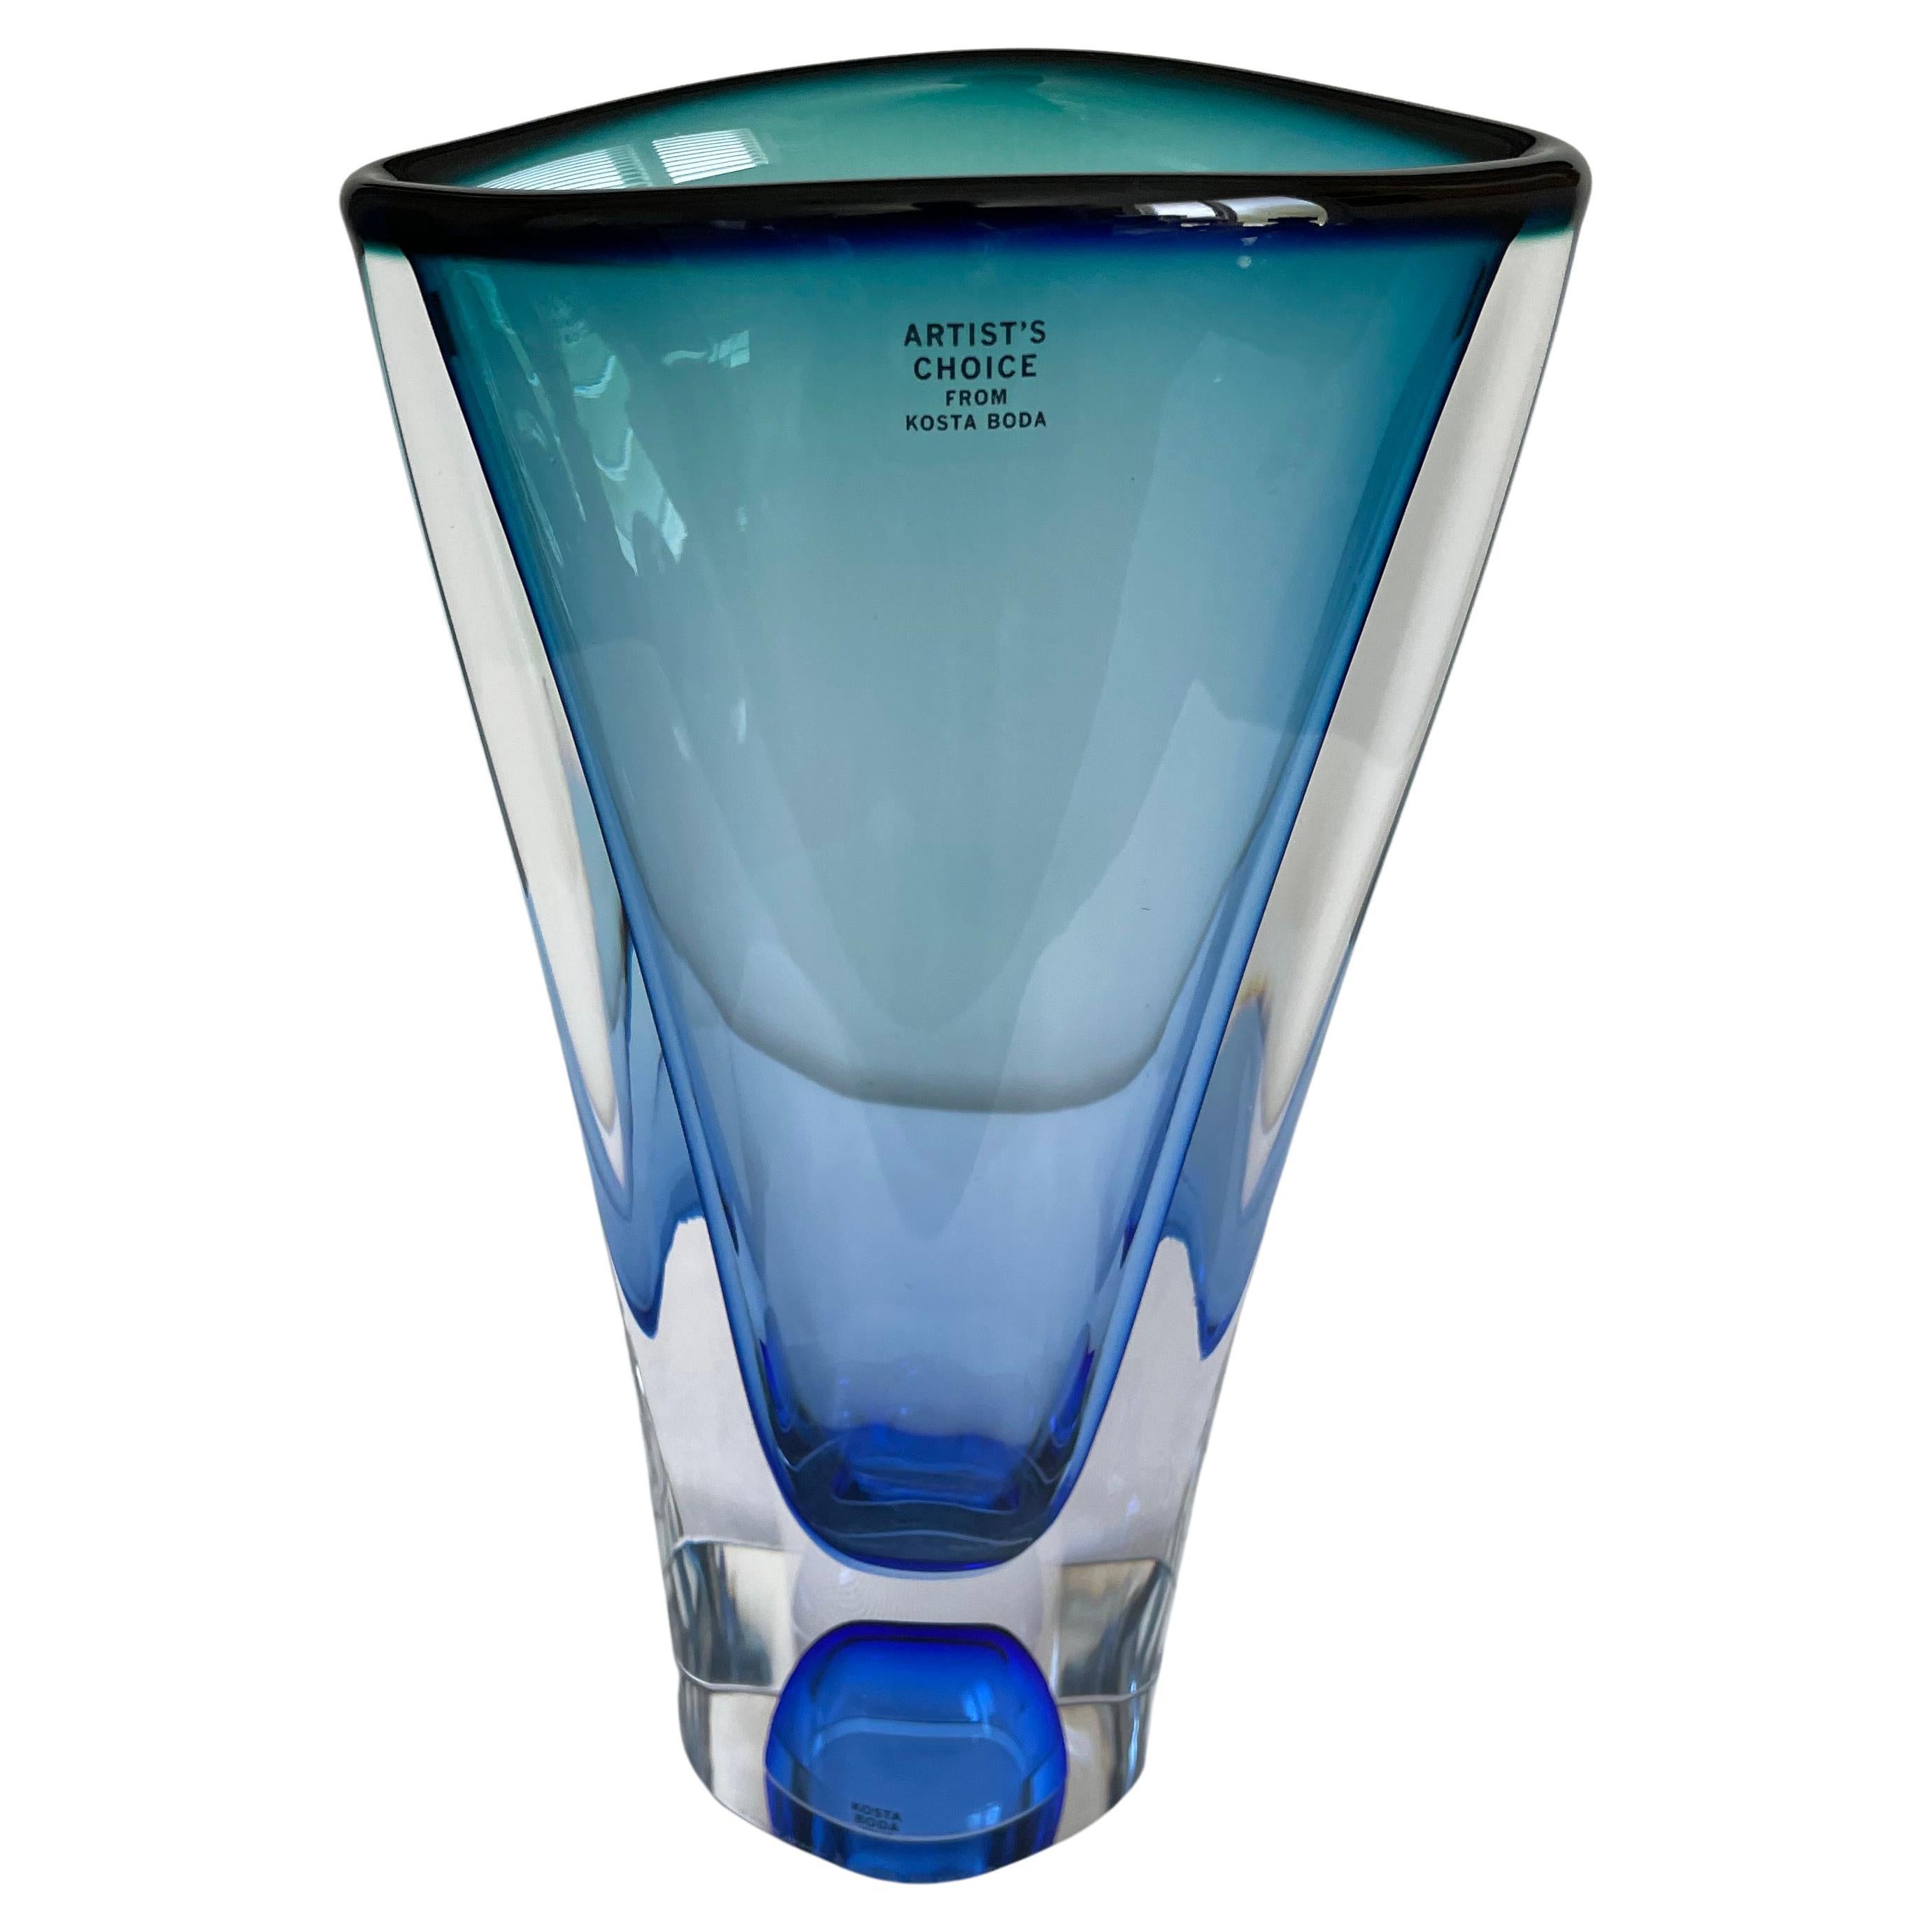 Vase grand bleu de la série Vision de Kosta Boda par Goran Warff, vers 2008